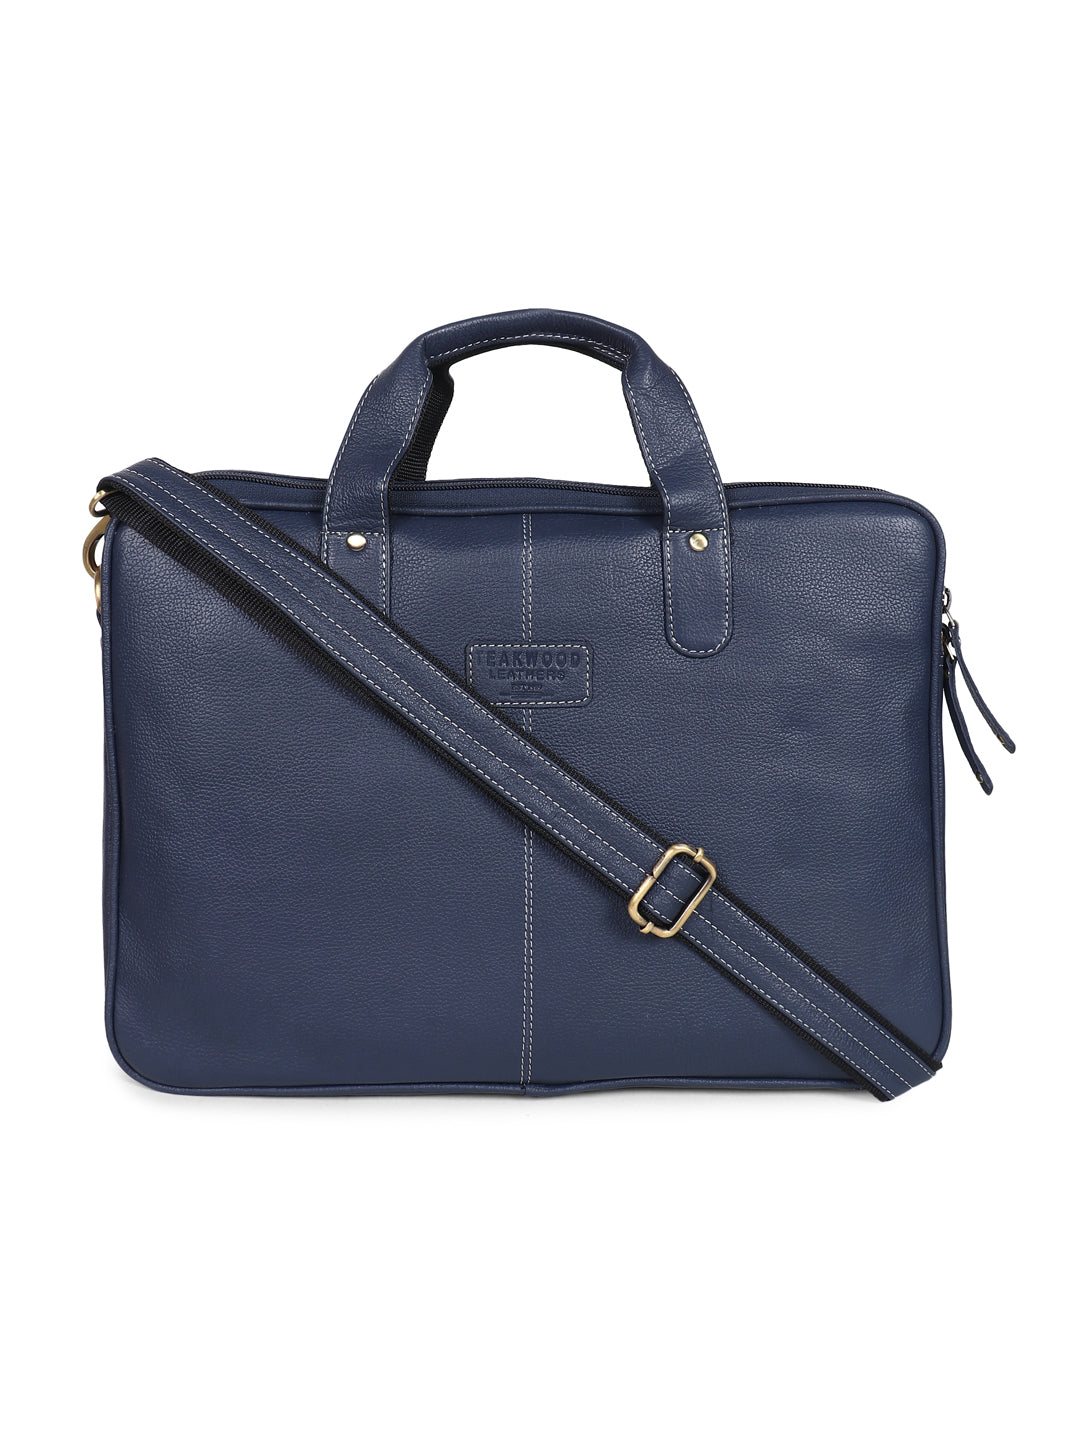 Wildhorn Genuine Leather Black 16 inch Briefcase Laptop Bag for Men wi –  WILDHORN